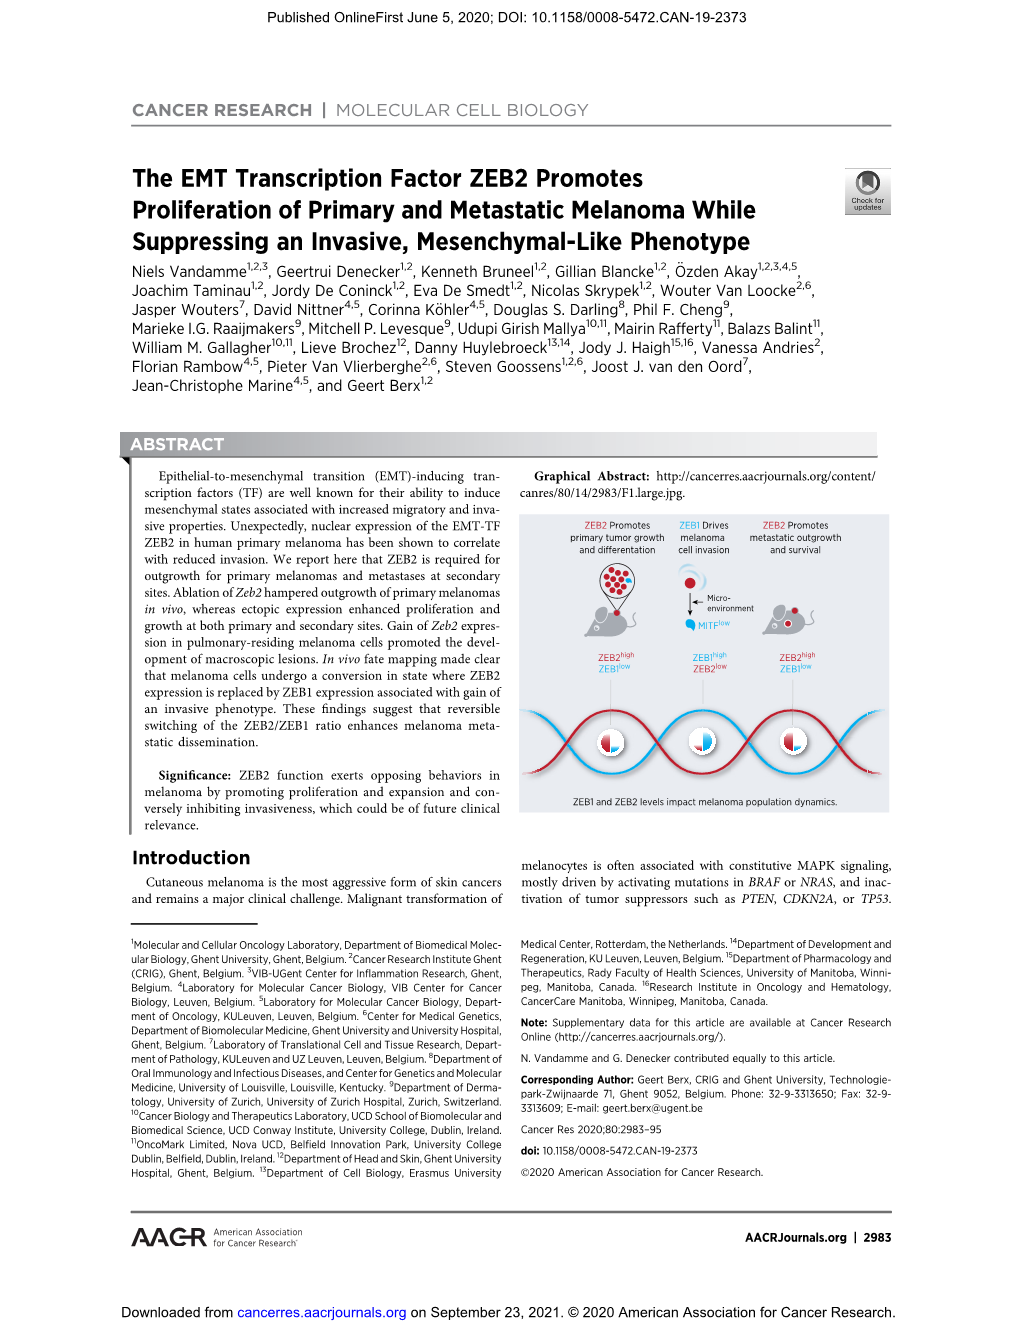 The EMT Transcription Factor ZEB2 Promotes Proliferation of Primary